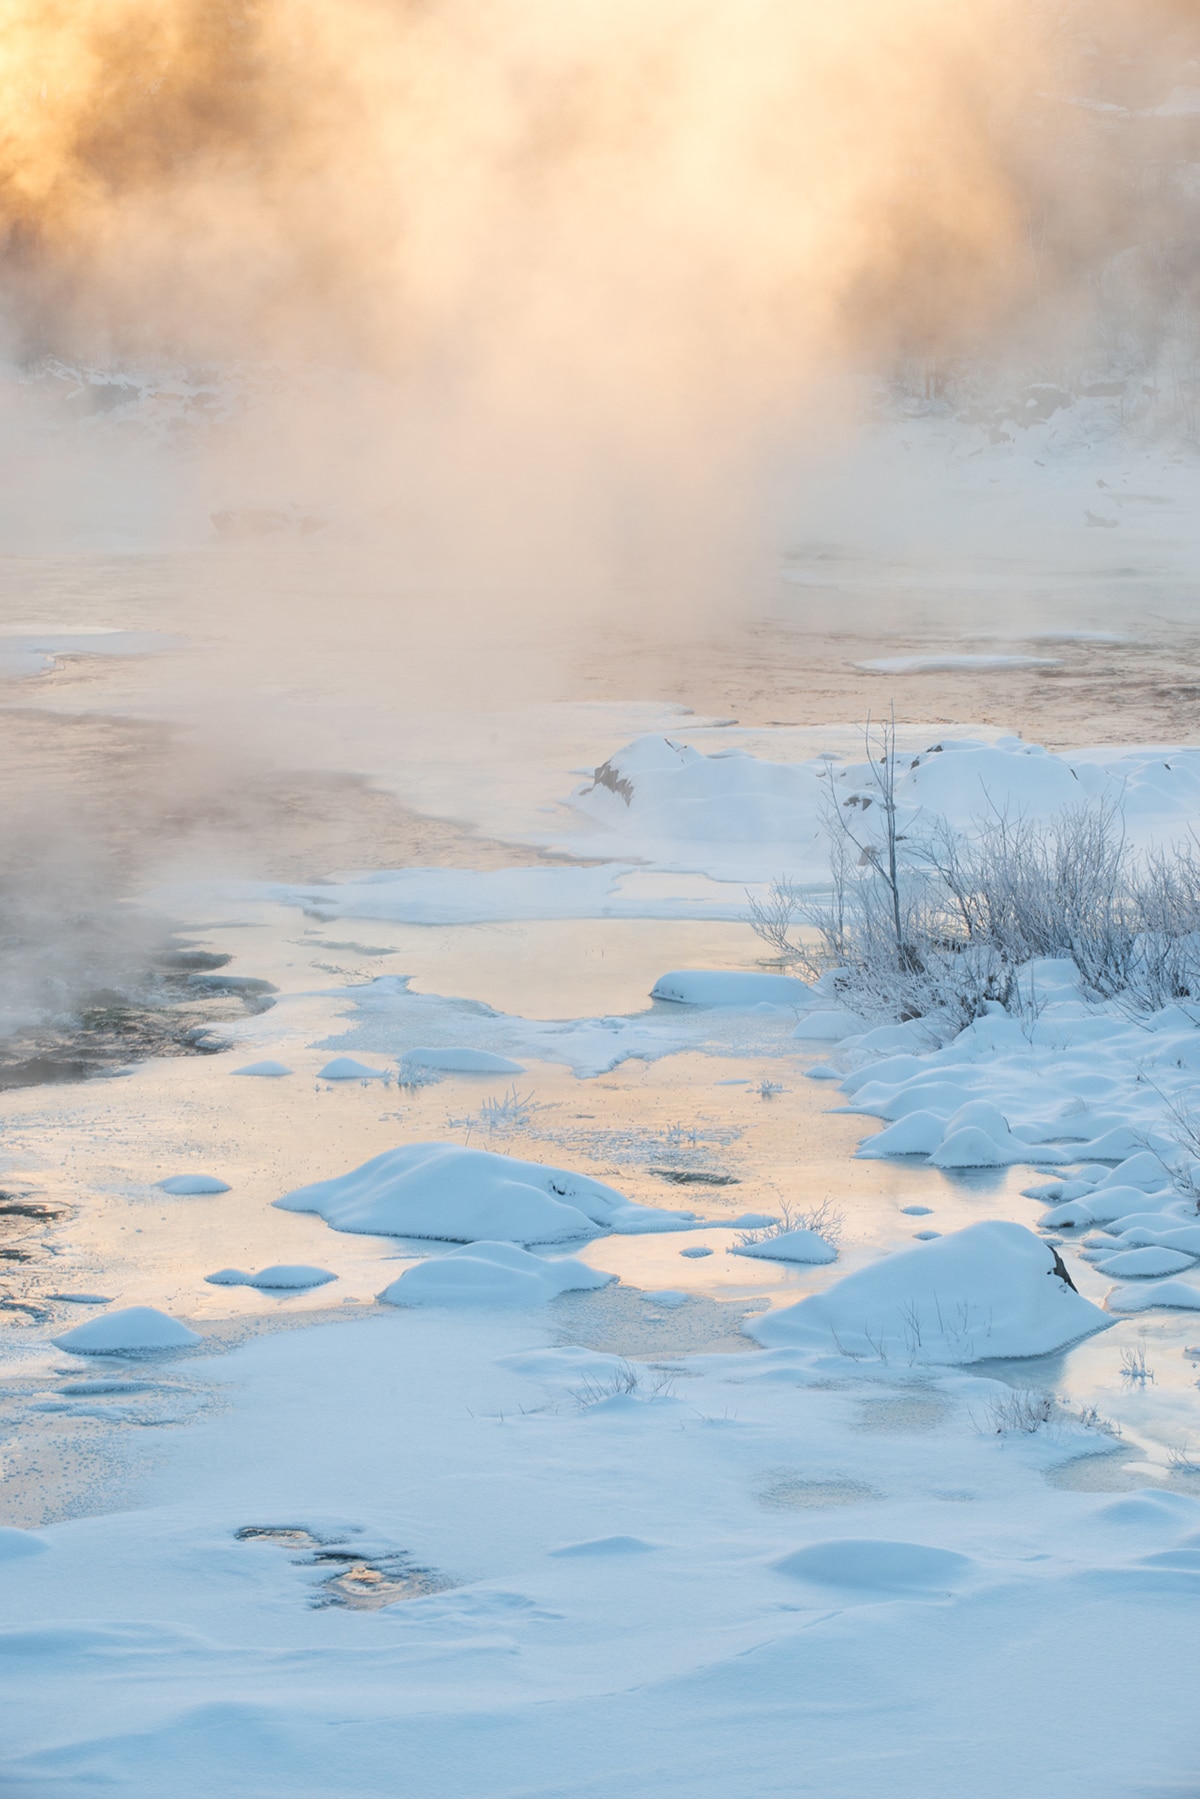 Smoke ice at sunrise, 19 degrees below zero, Carrabassett River, North Anson, Maine.